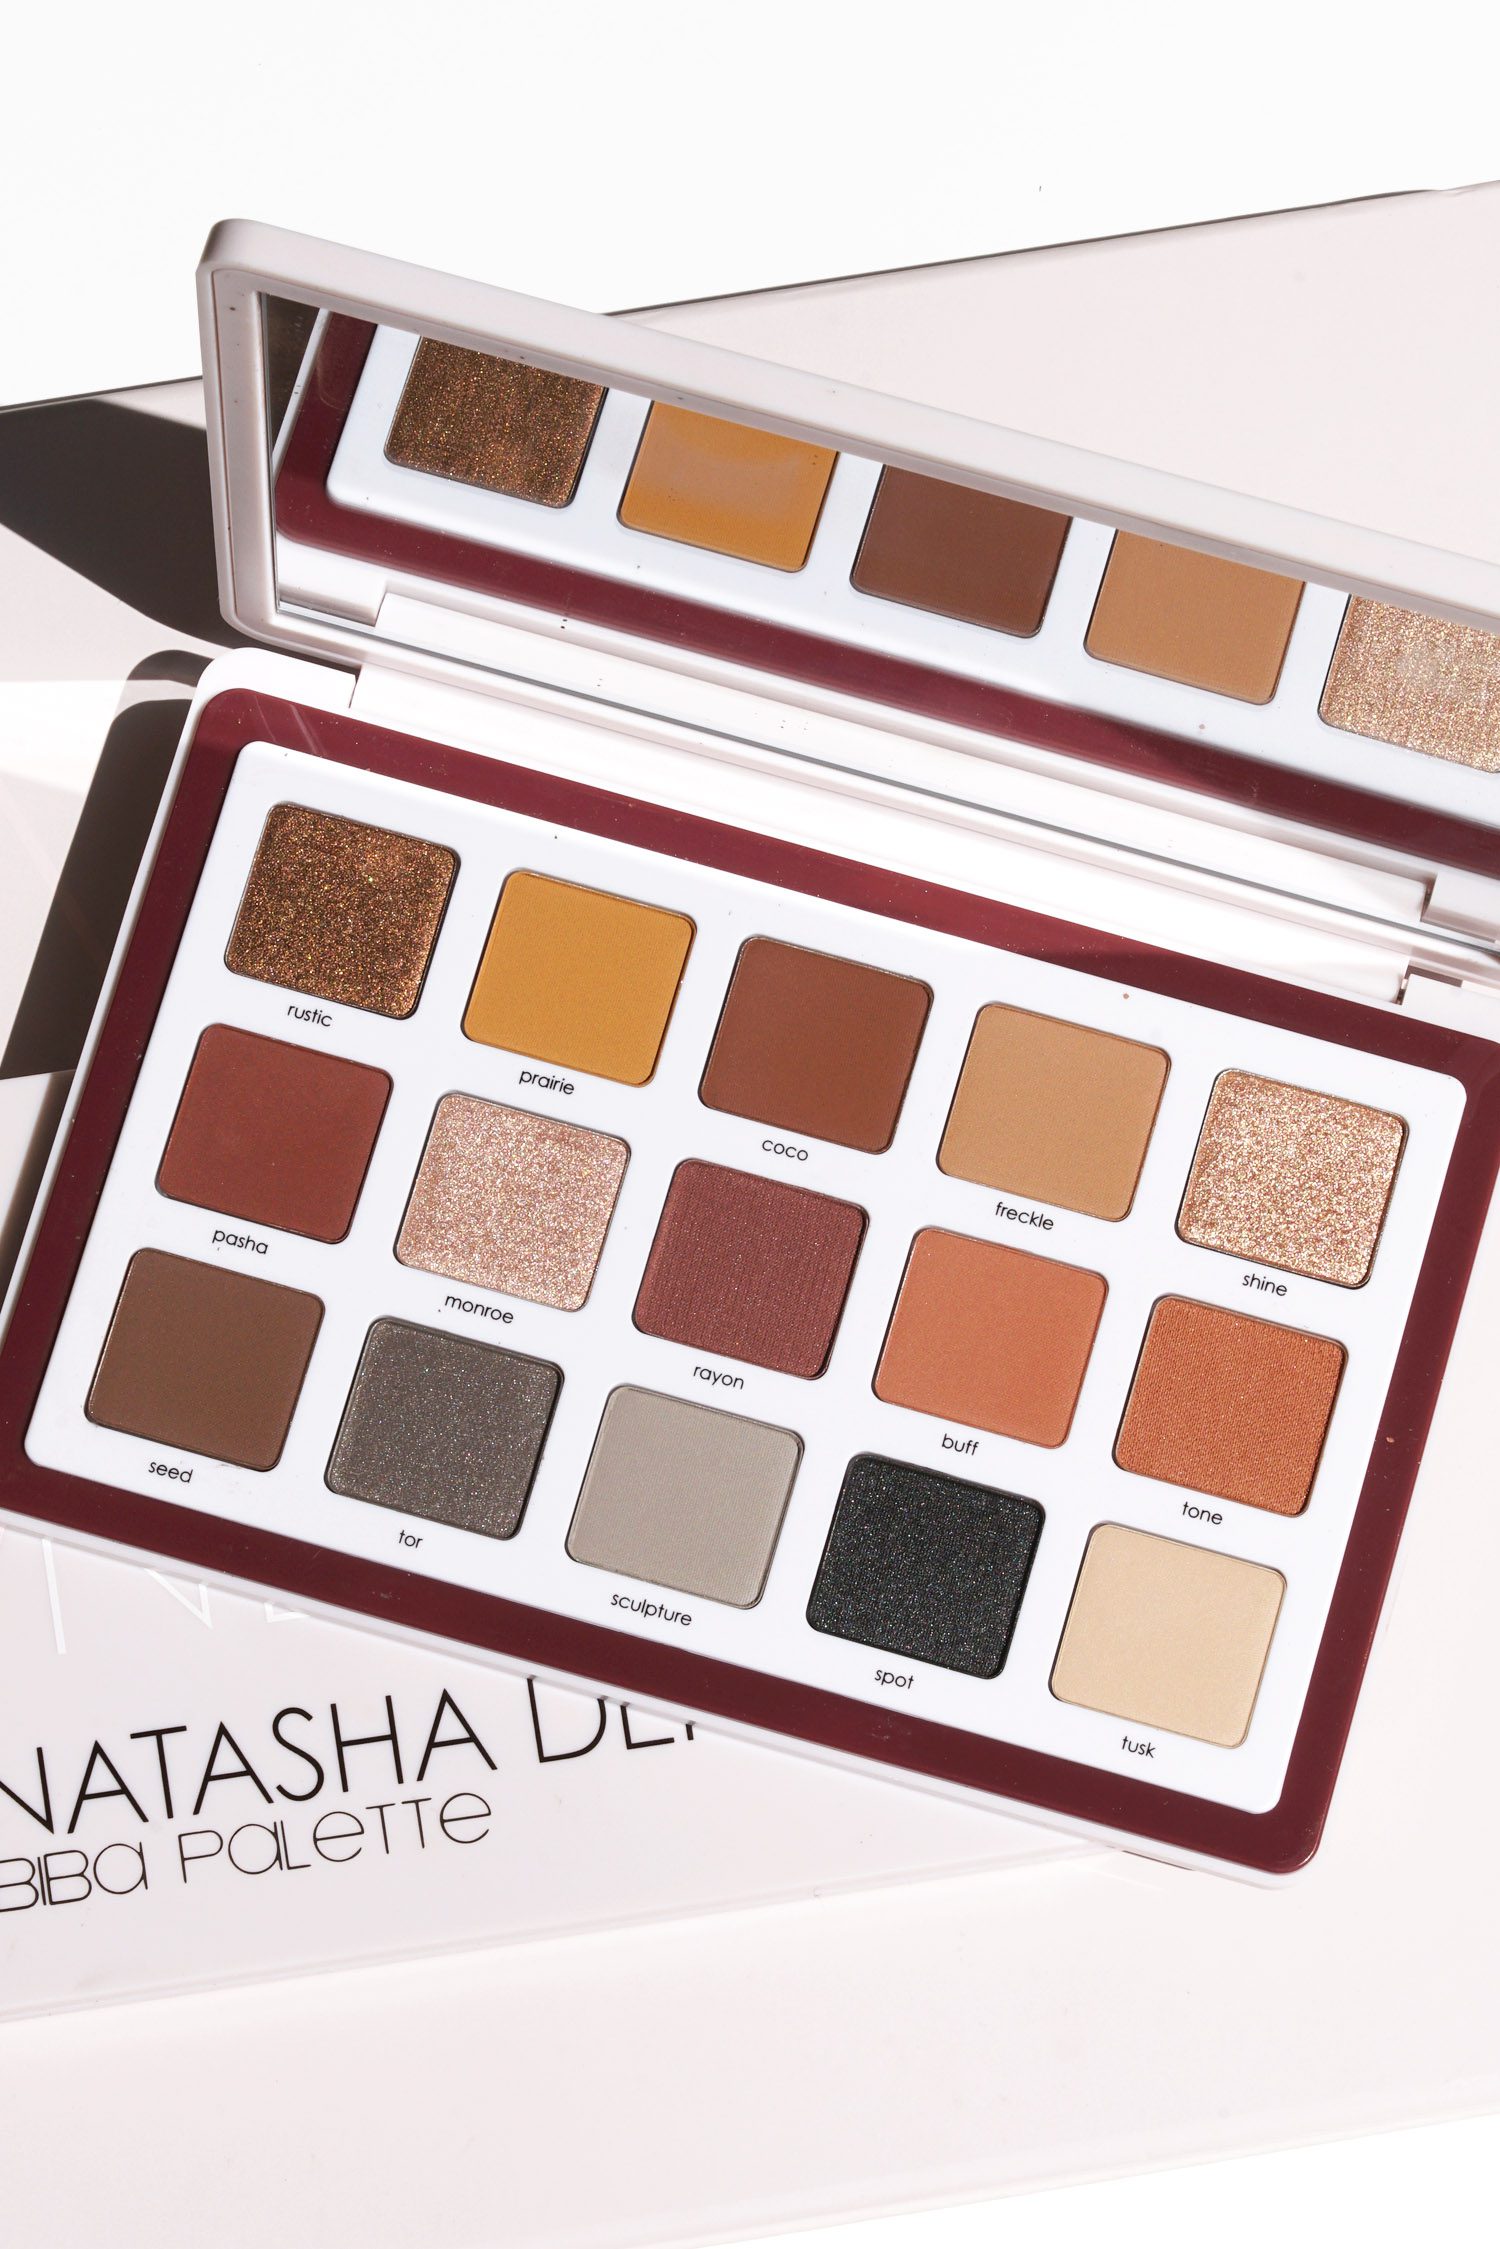 Natasha Denona Biba Eyeshadow Palette Review - The Beauty Look Book